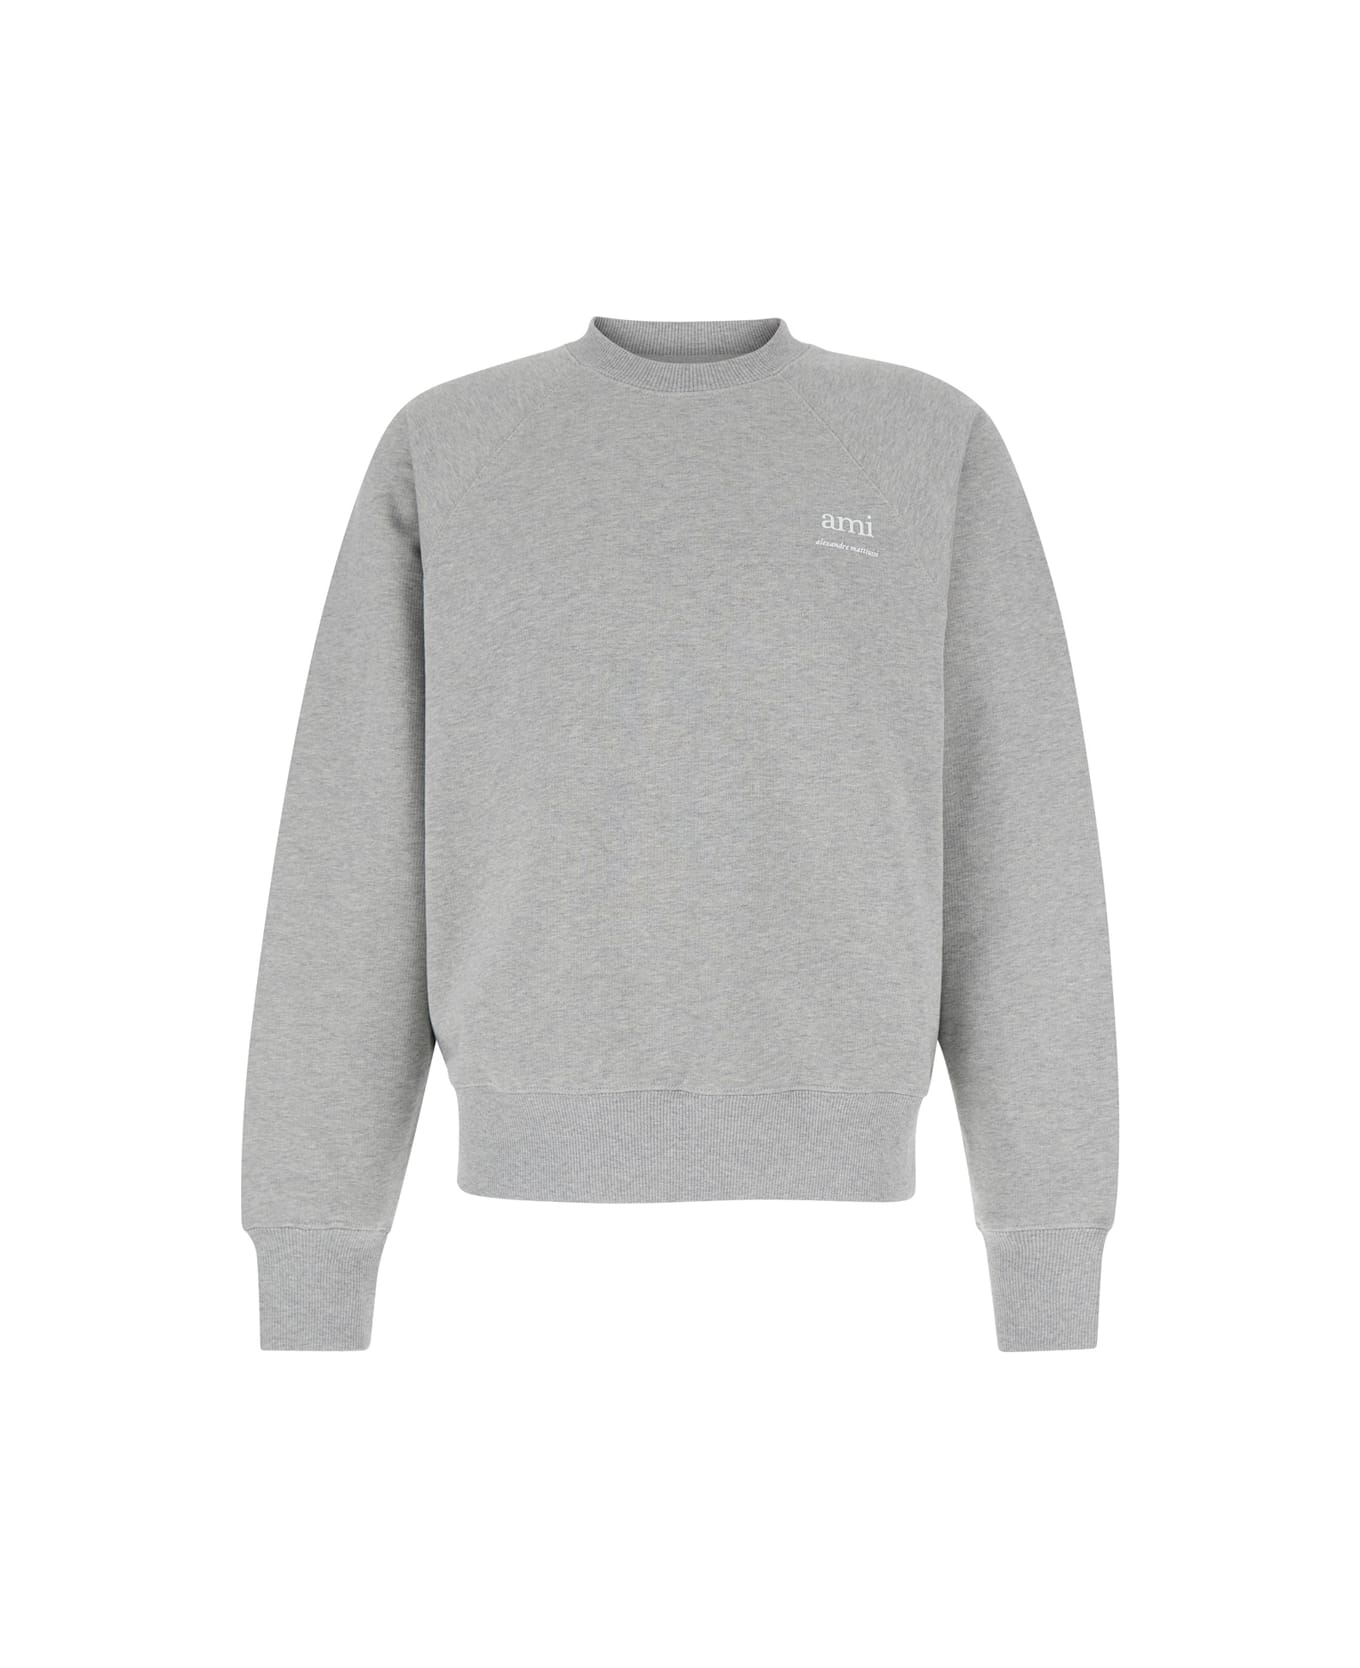 Ami Alexandre Mattiussi Grey Crew Neck Sweater In Cotton Man - Grey